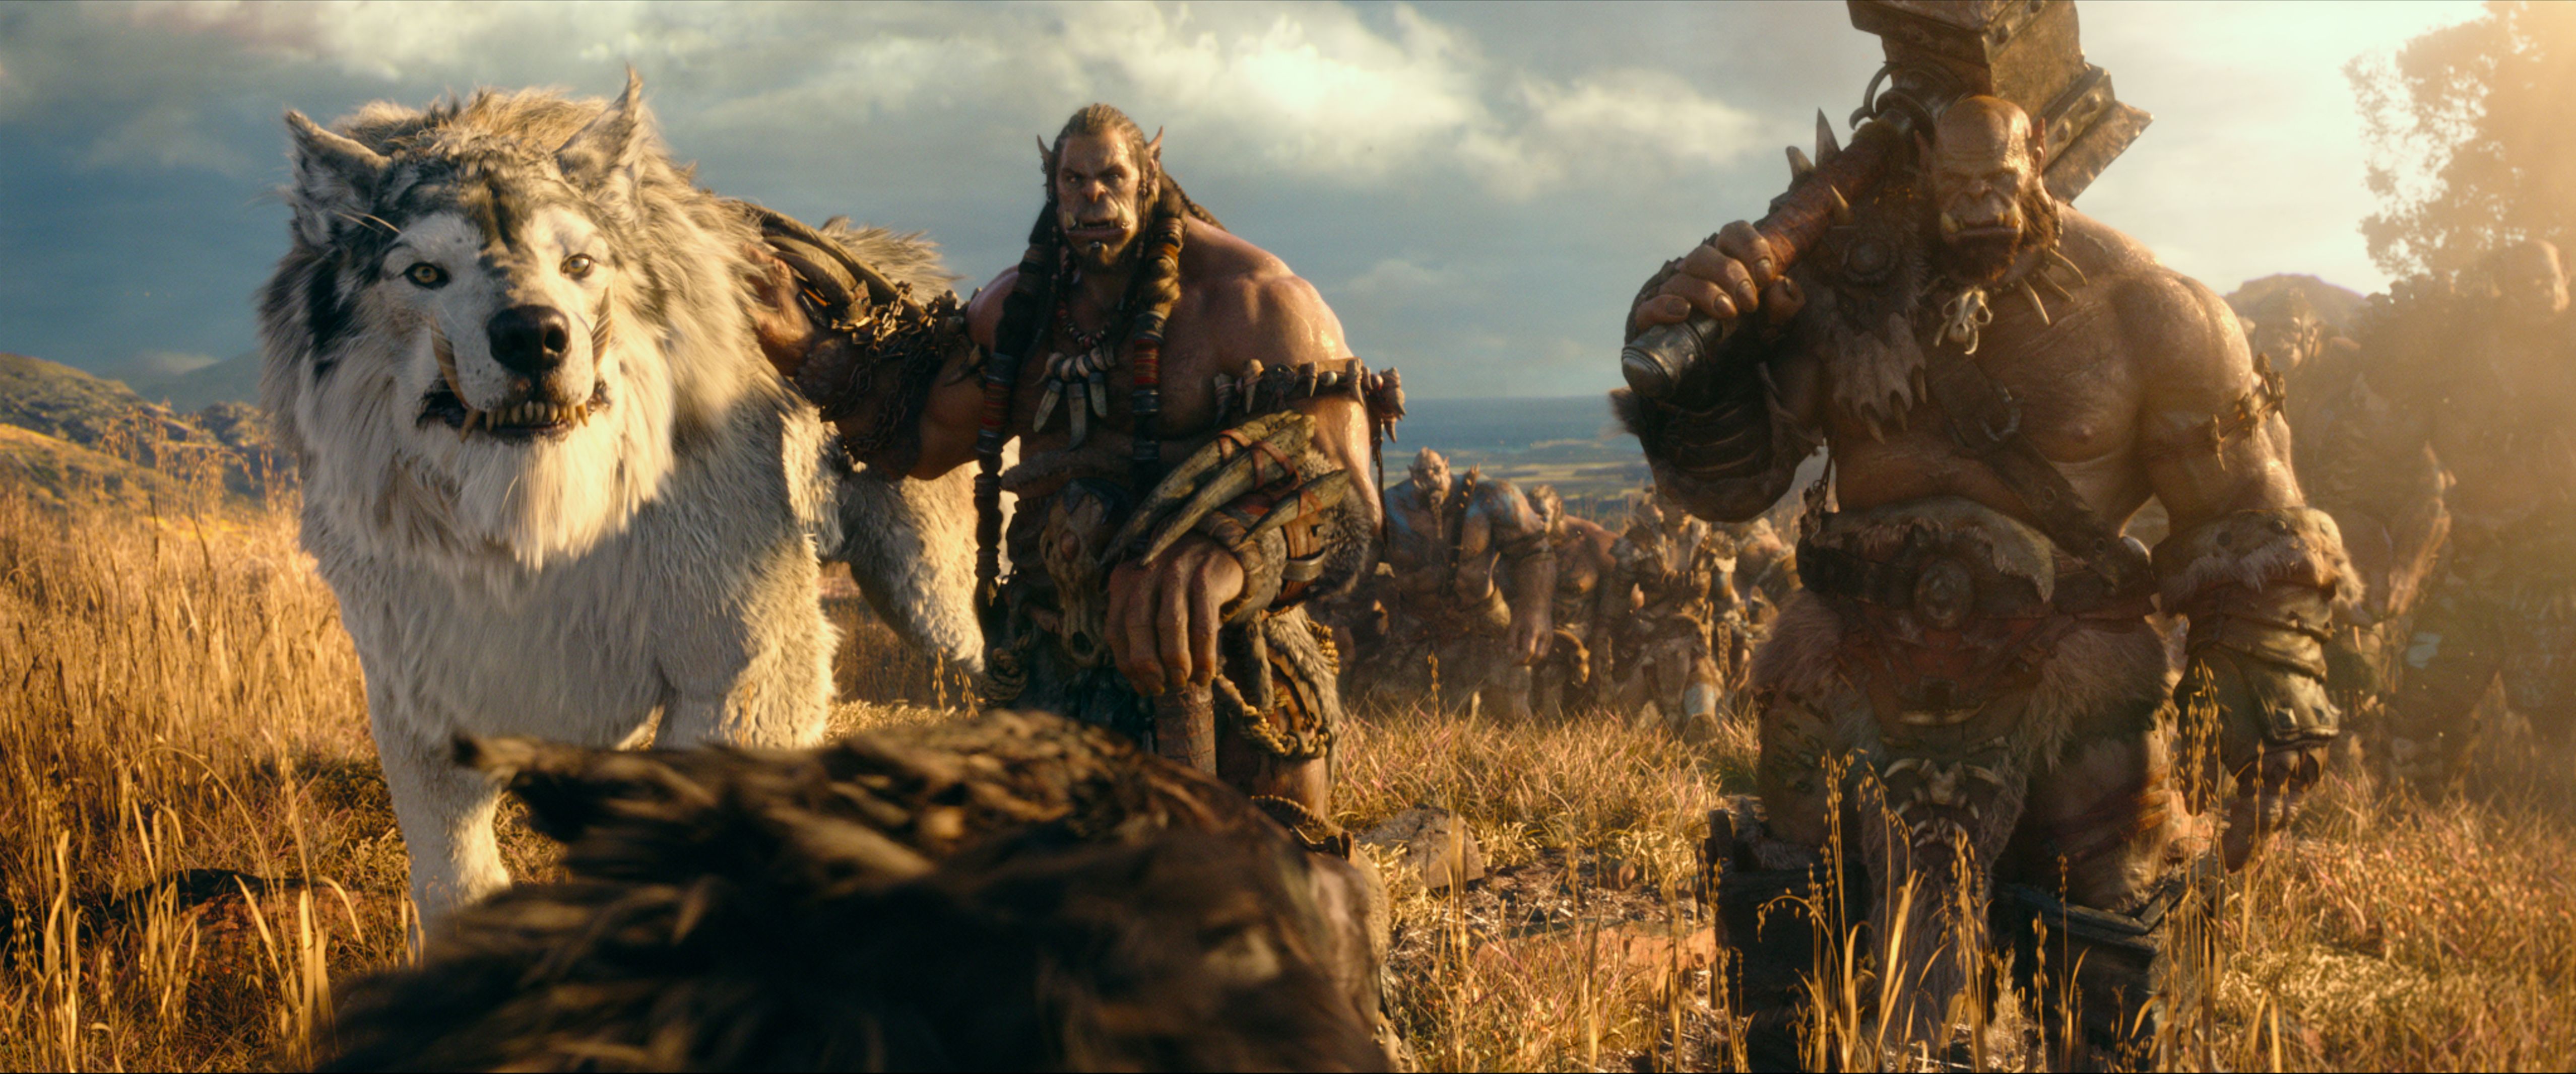 Warcraft 2 Duncan Jones Game for Sequel, Admits